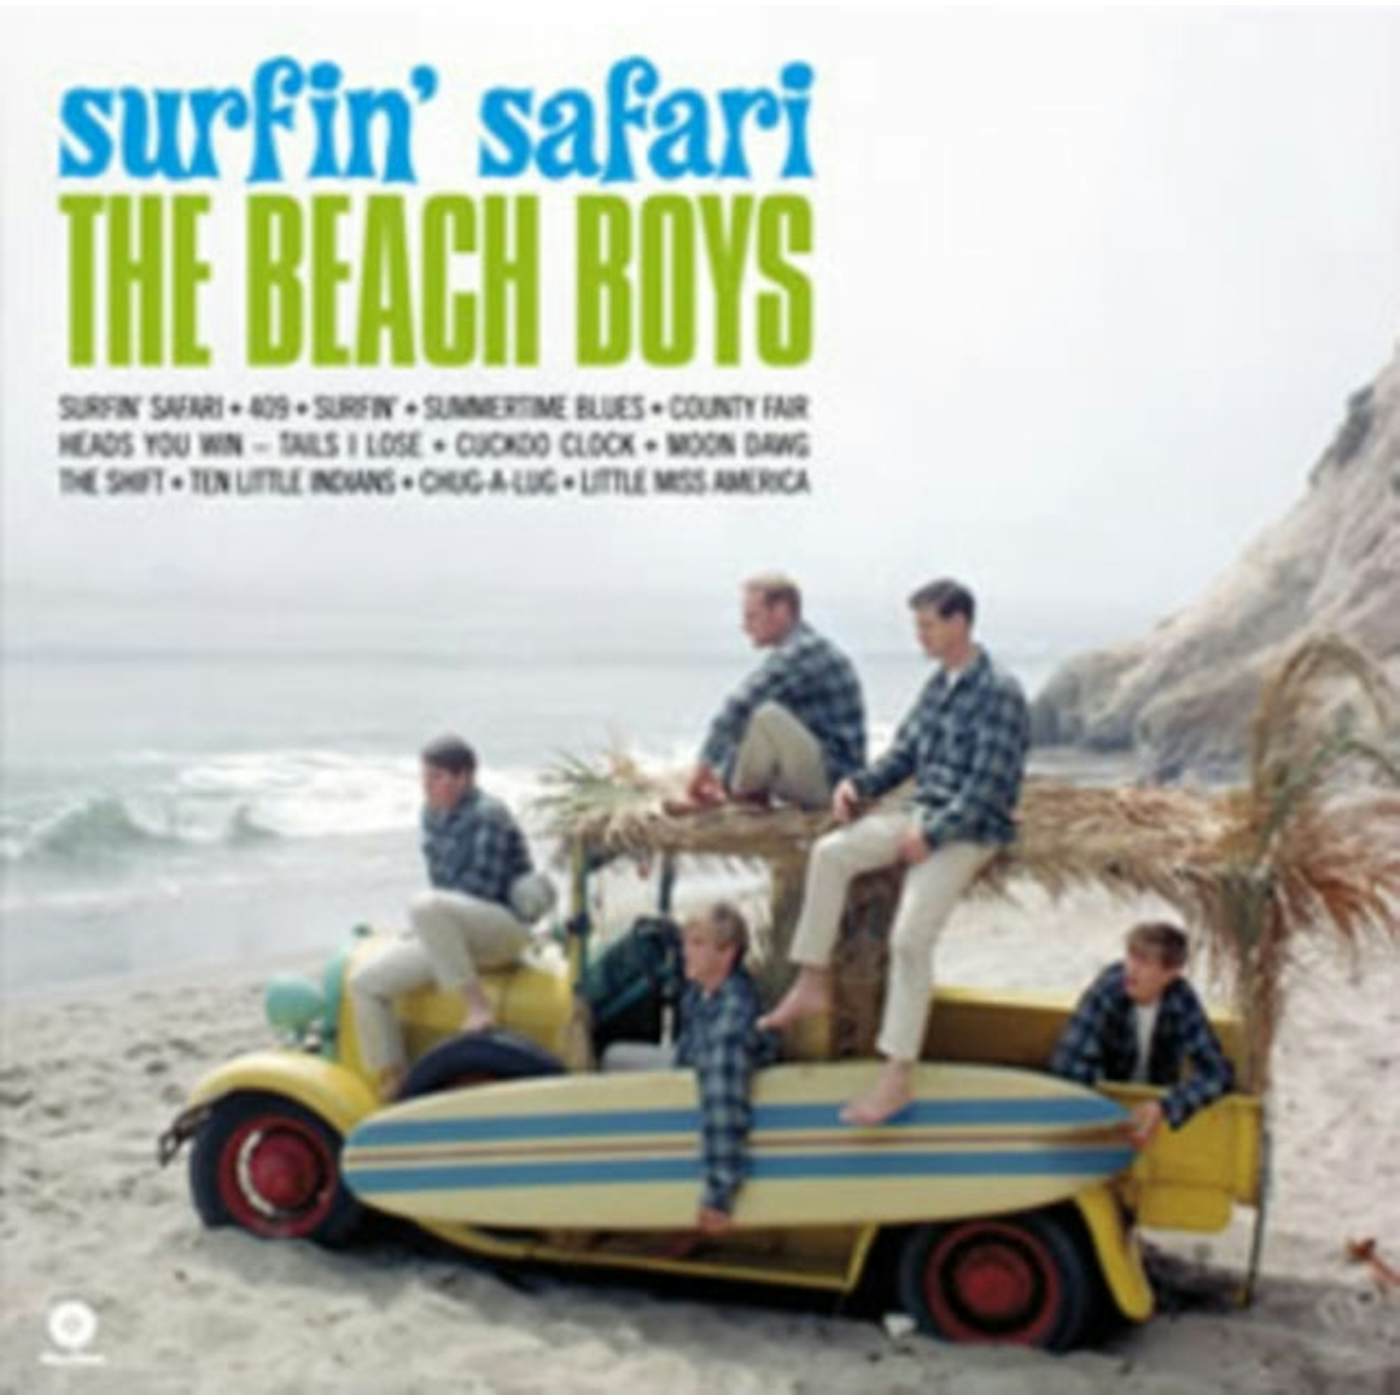 The Beach Boys LP Vinyl Record - Surfin' Safari